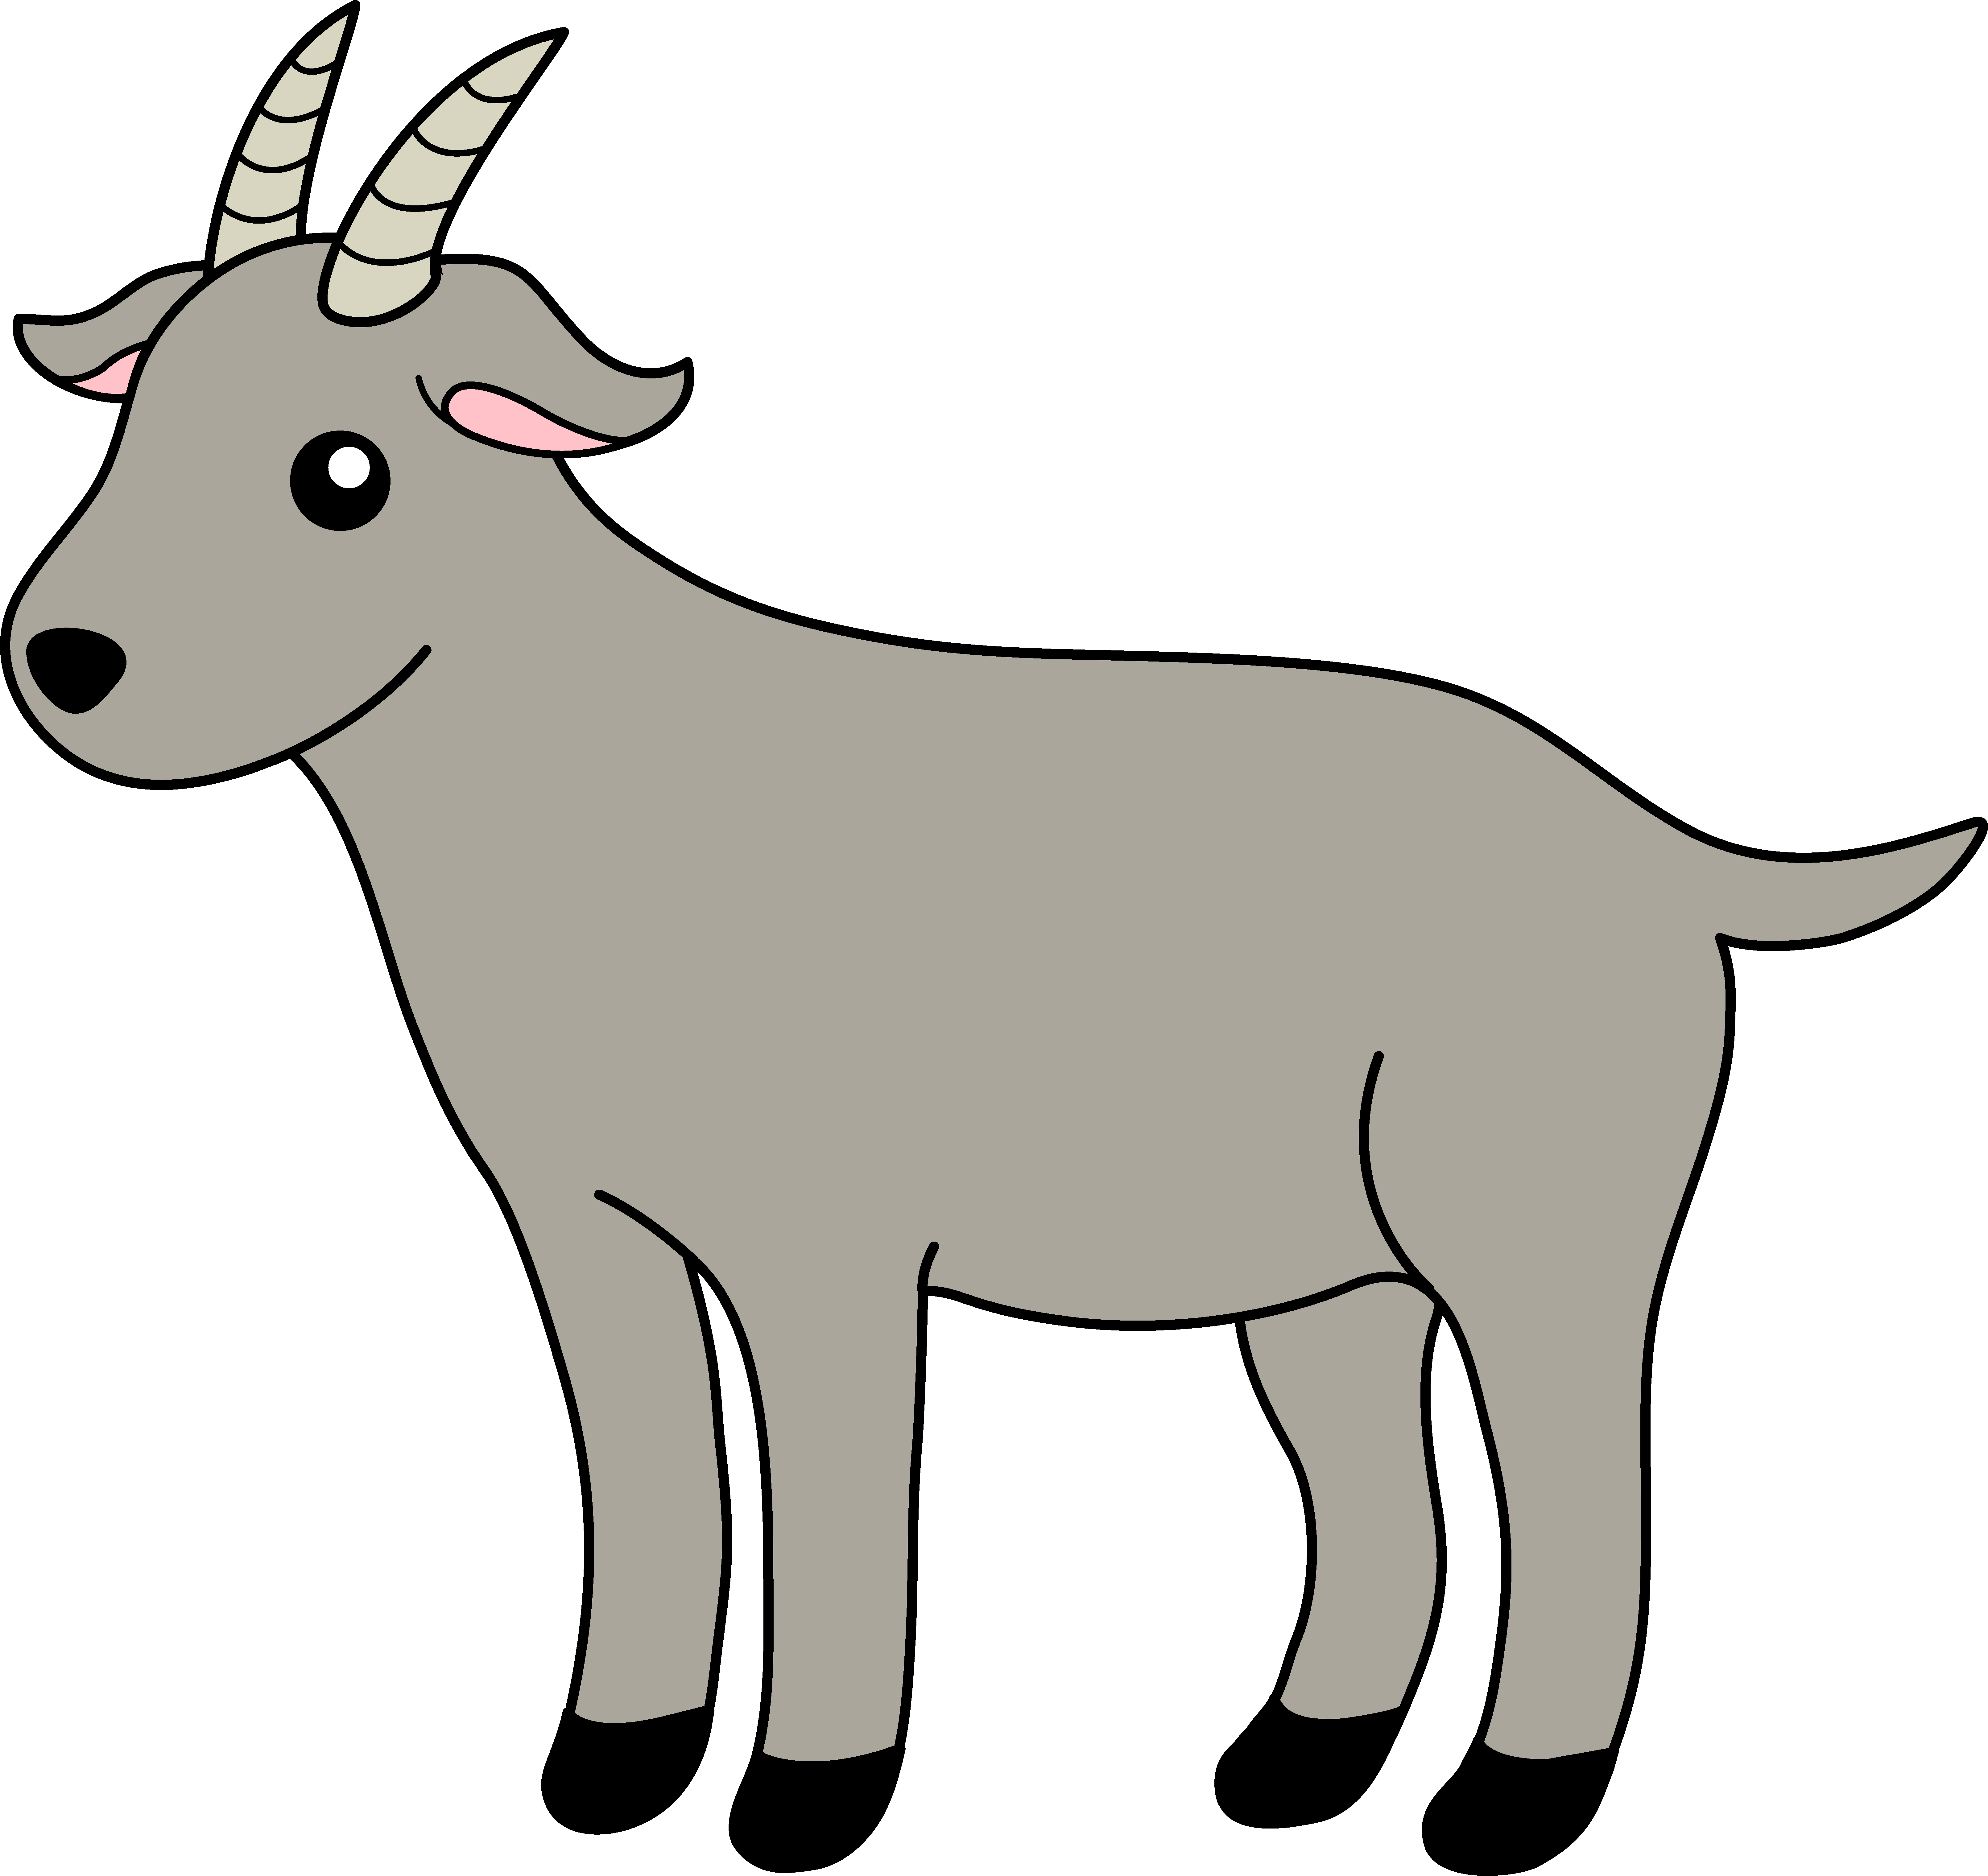 A goat clipart